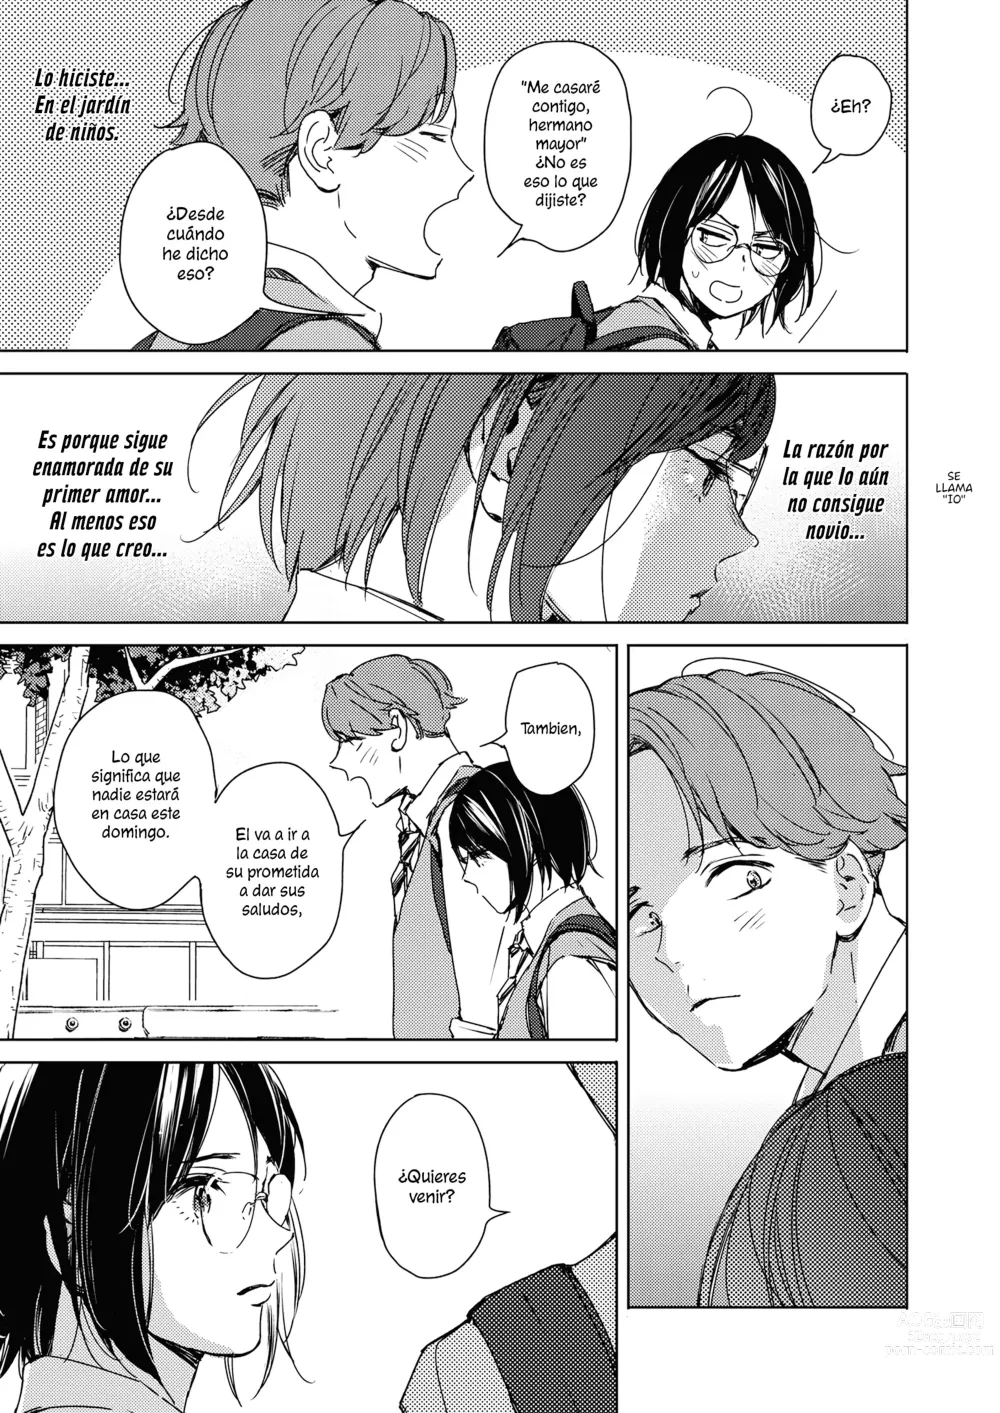 Page 3 of manga Gafas del ~Primer amor~